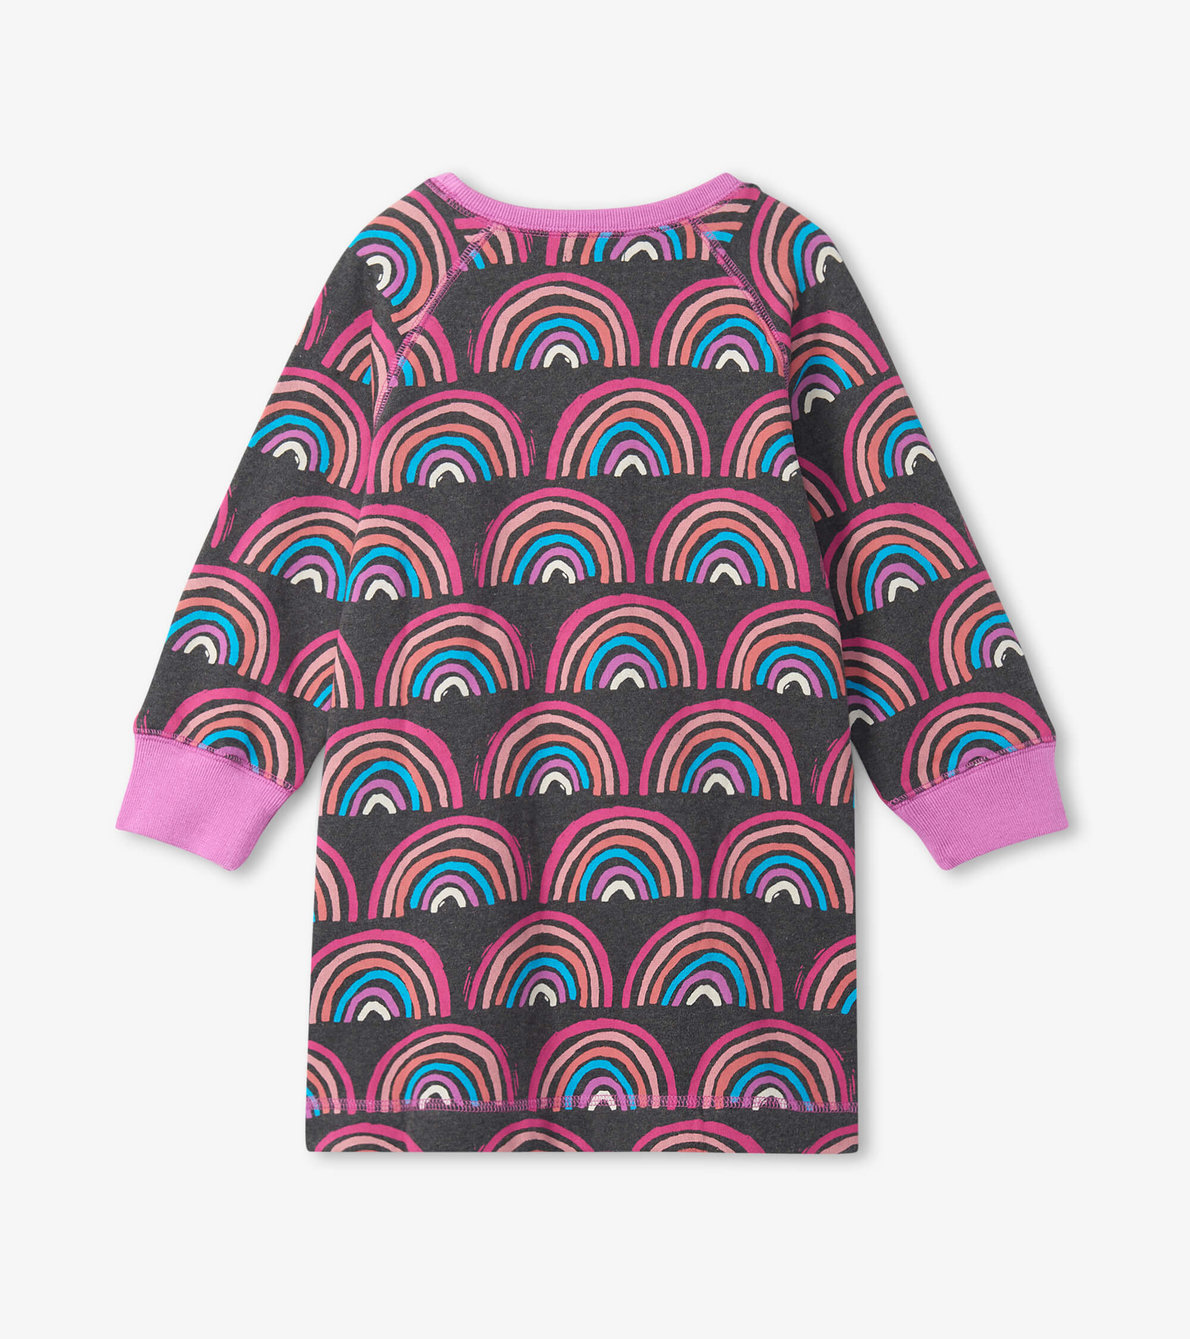 View larger image of Prismatic Rainbows Sweatshirt Dress